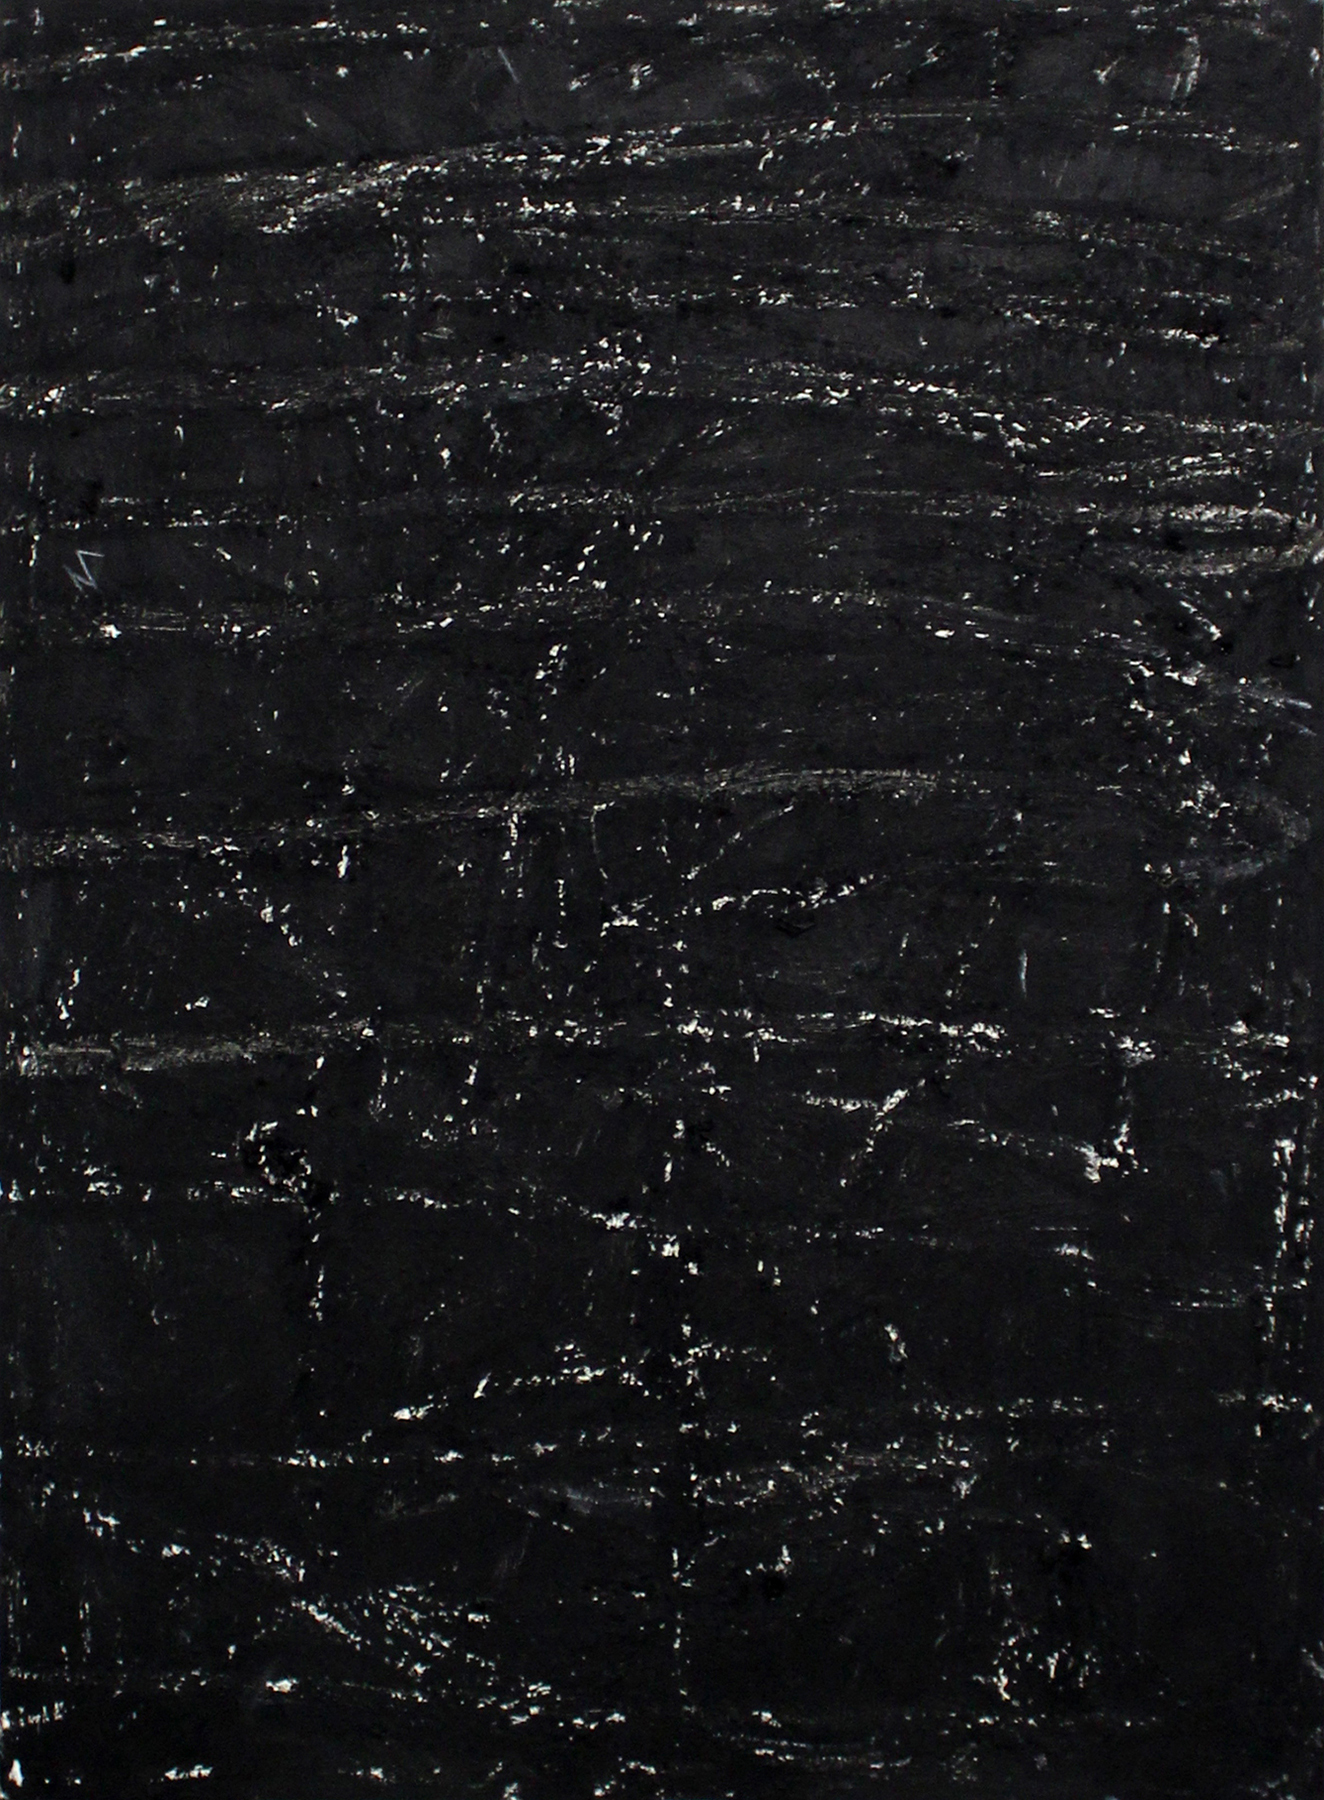   JOSEPH HART   Grace Notes I , 2015, oil on canvas, 40" x 30" 